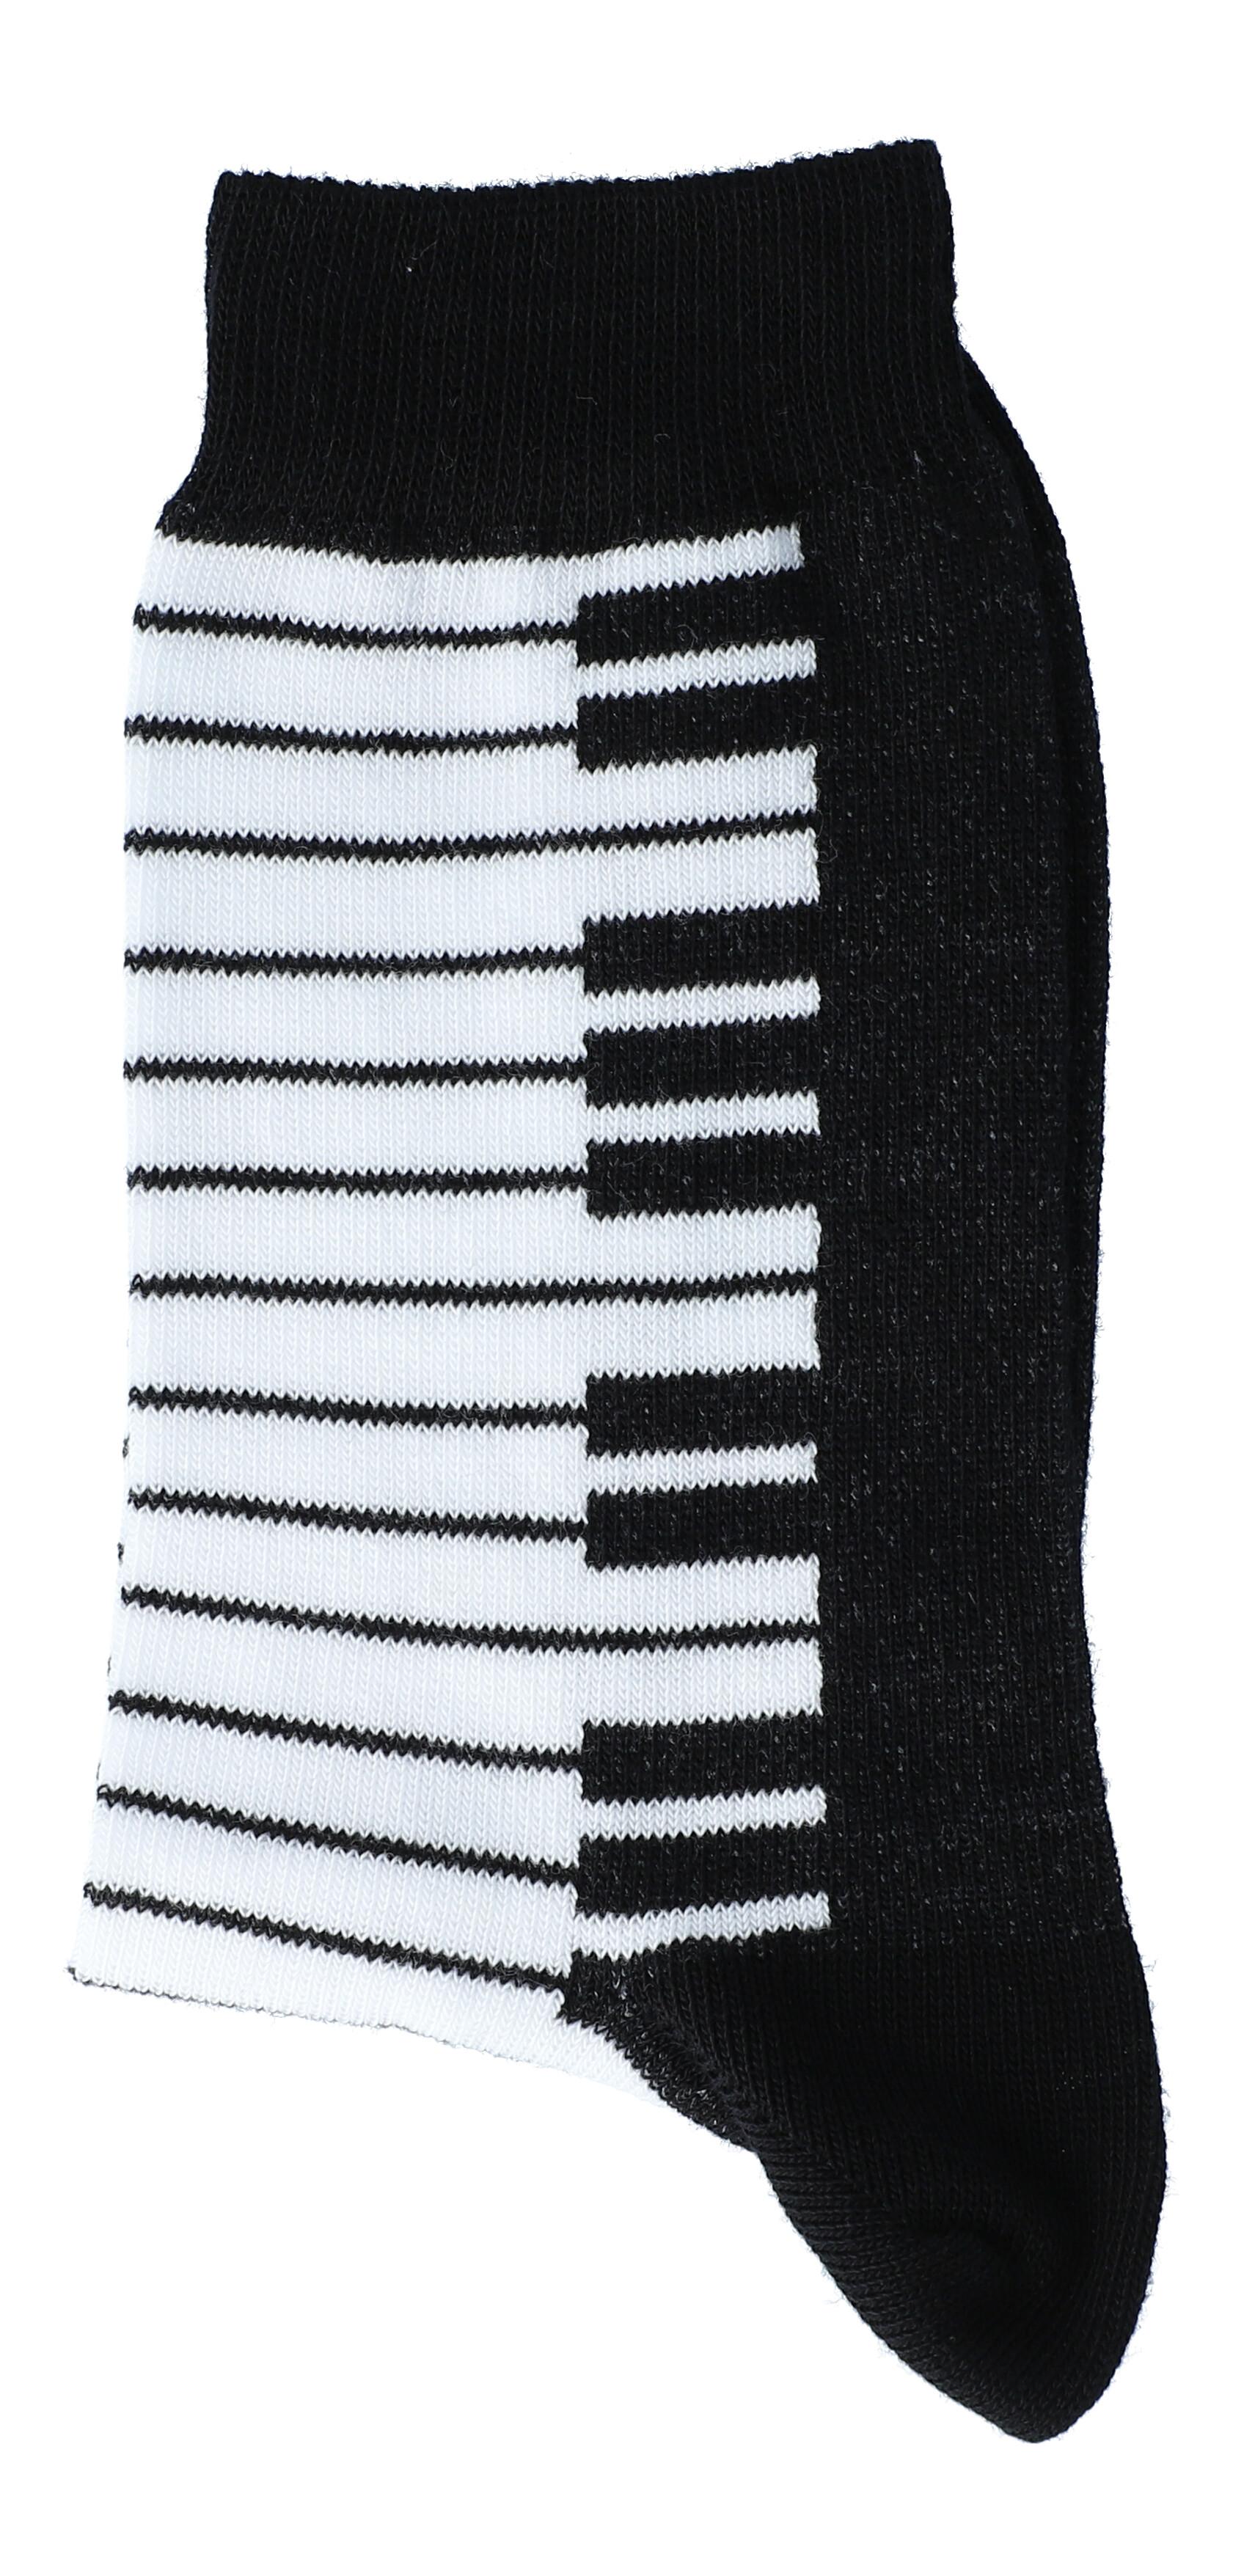 Socken Tastatur -Schwarz Gr. 39-42